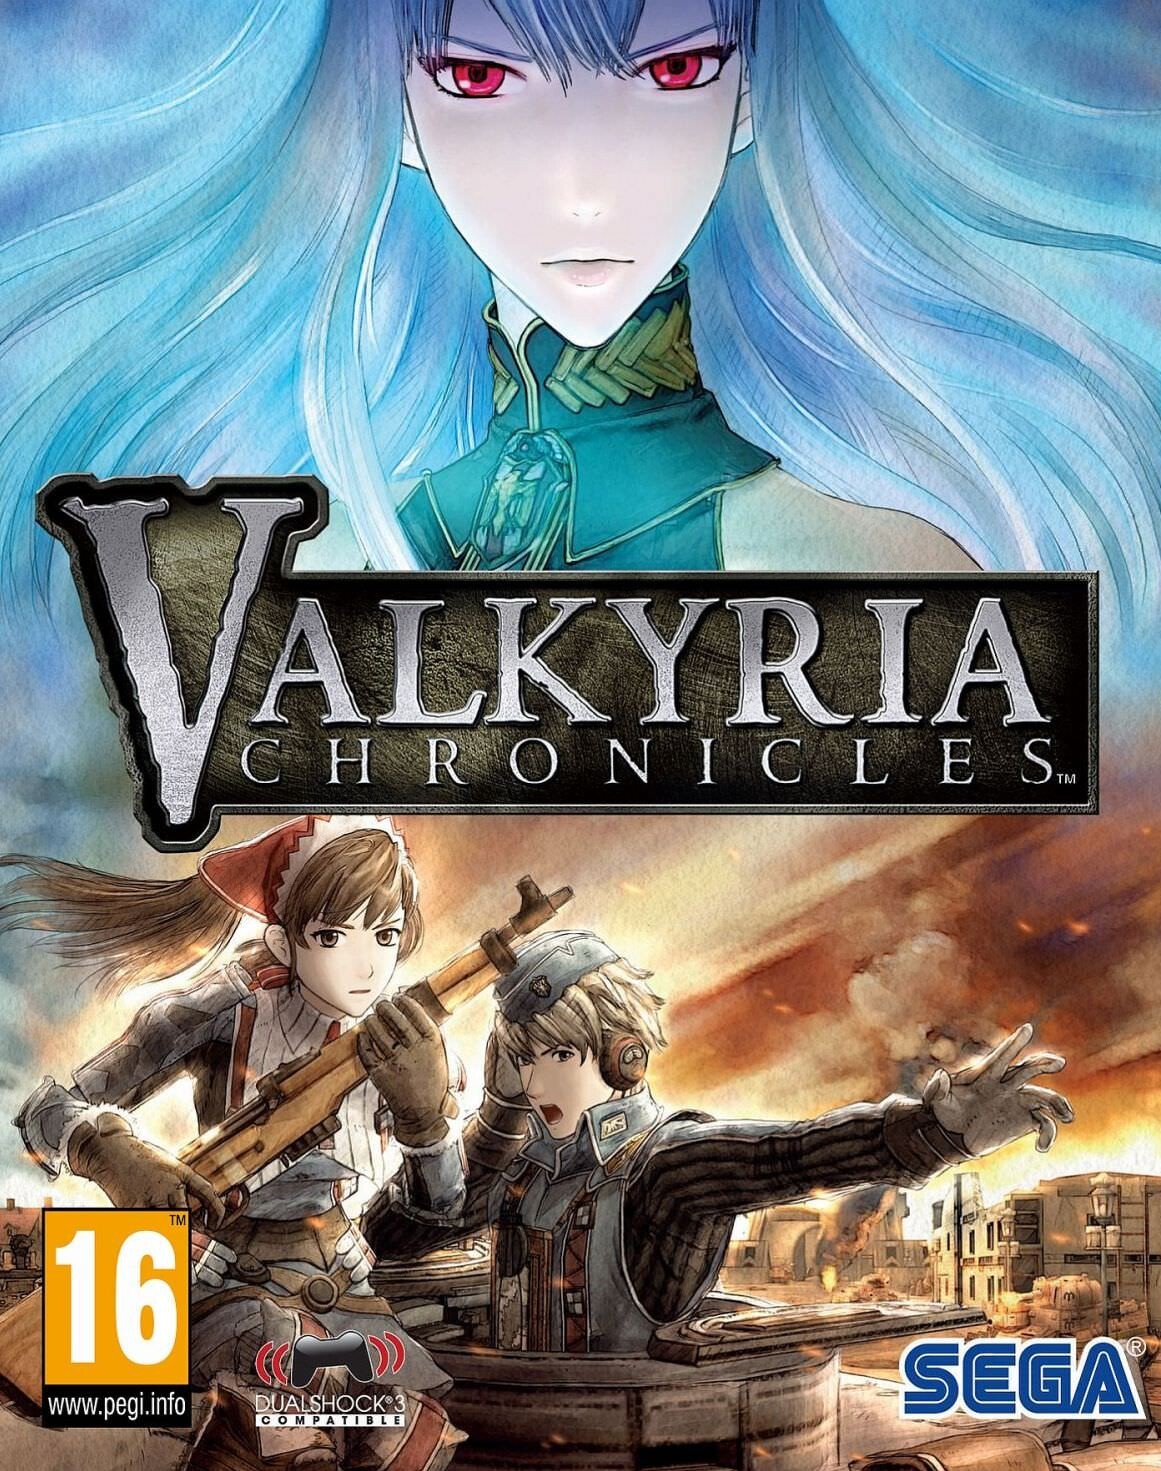 Sega Valkyria Chronicles PC